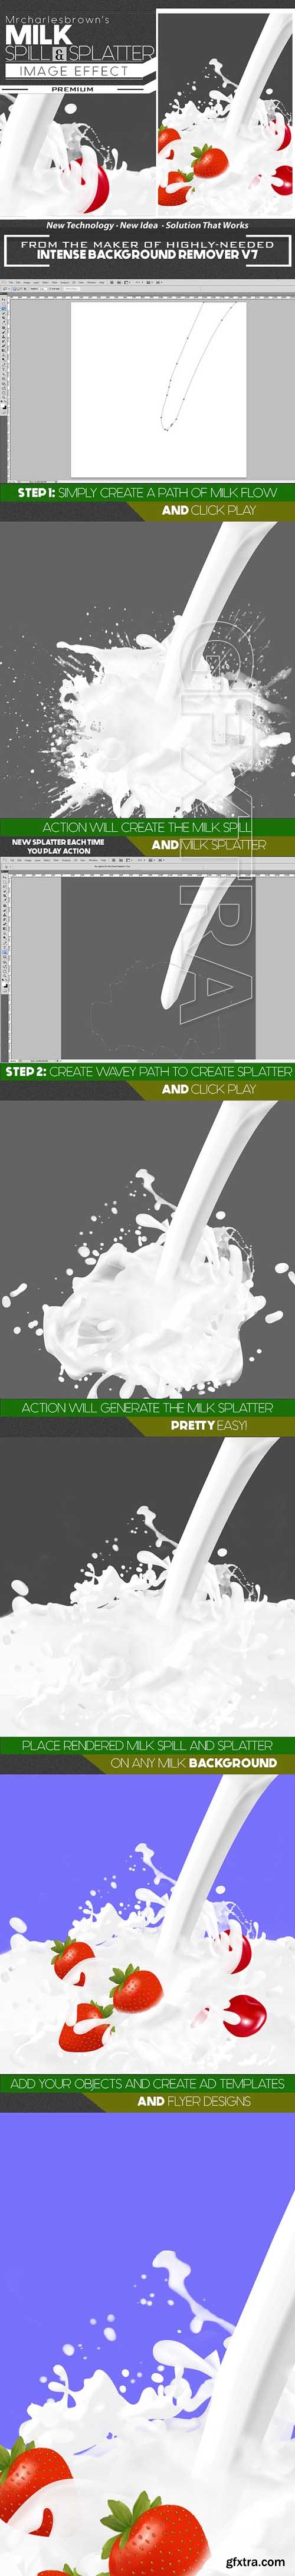 Graphicriver - Milk Spill and Splatter Image Effect 20143294